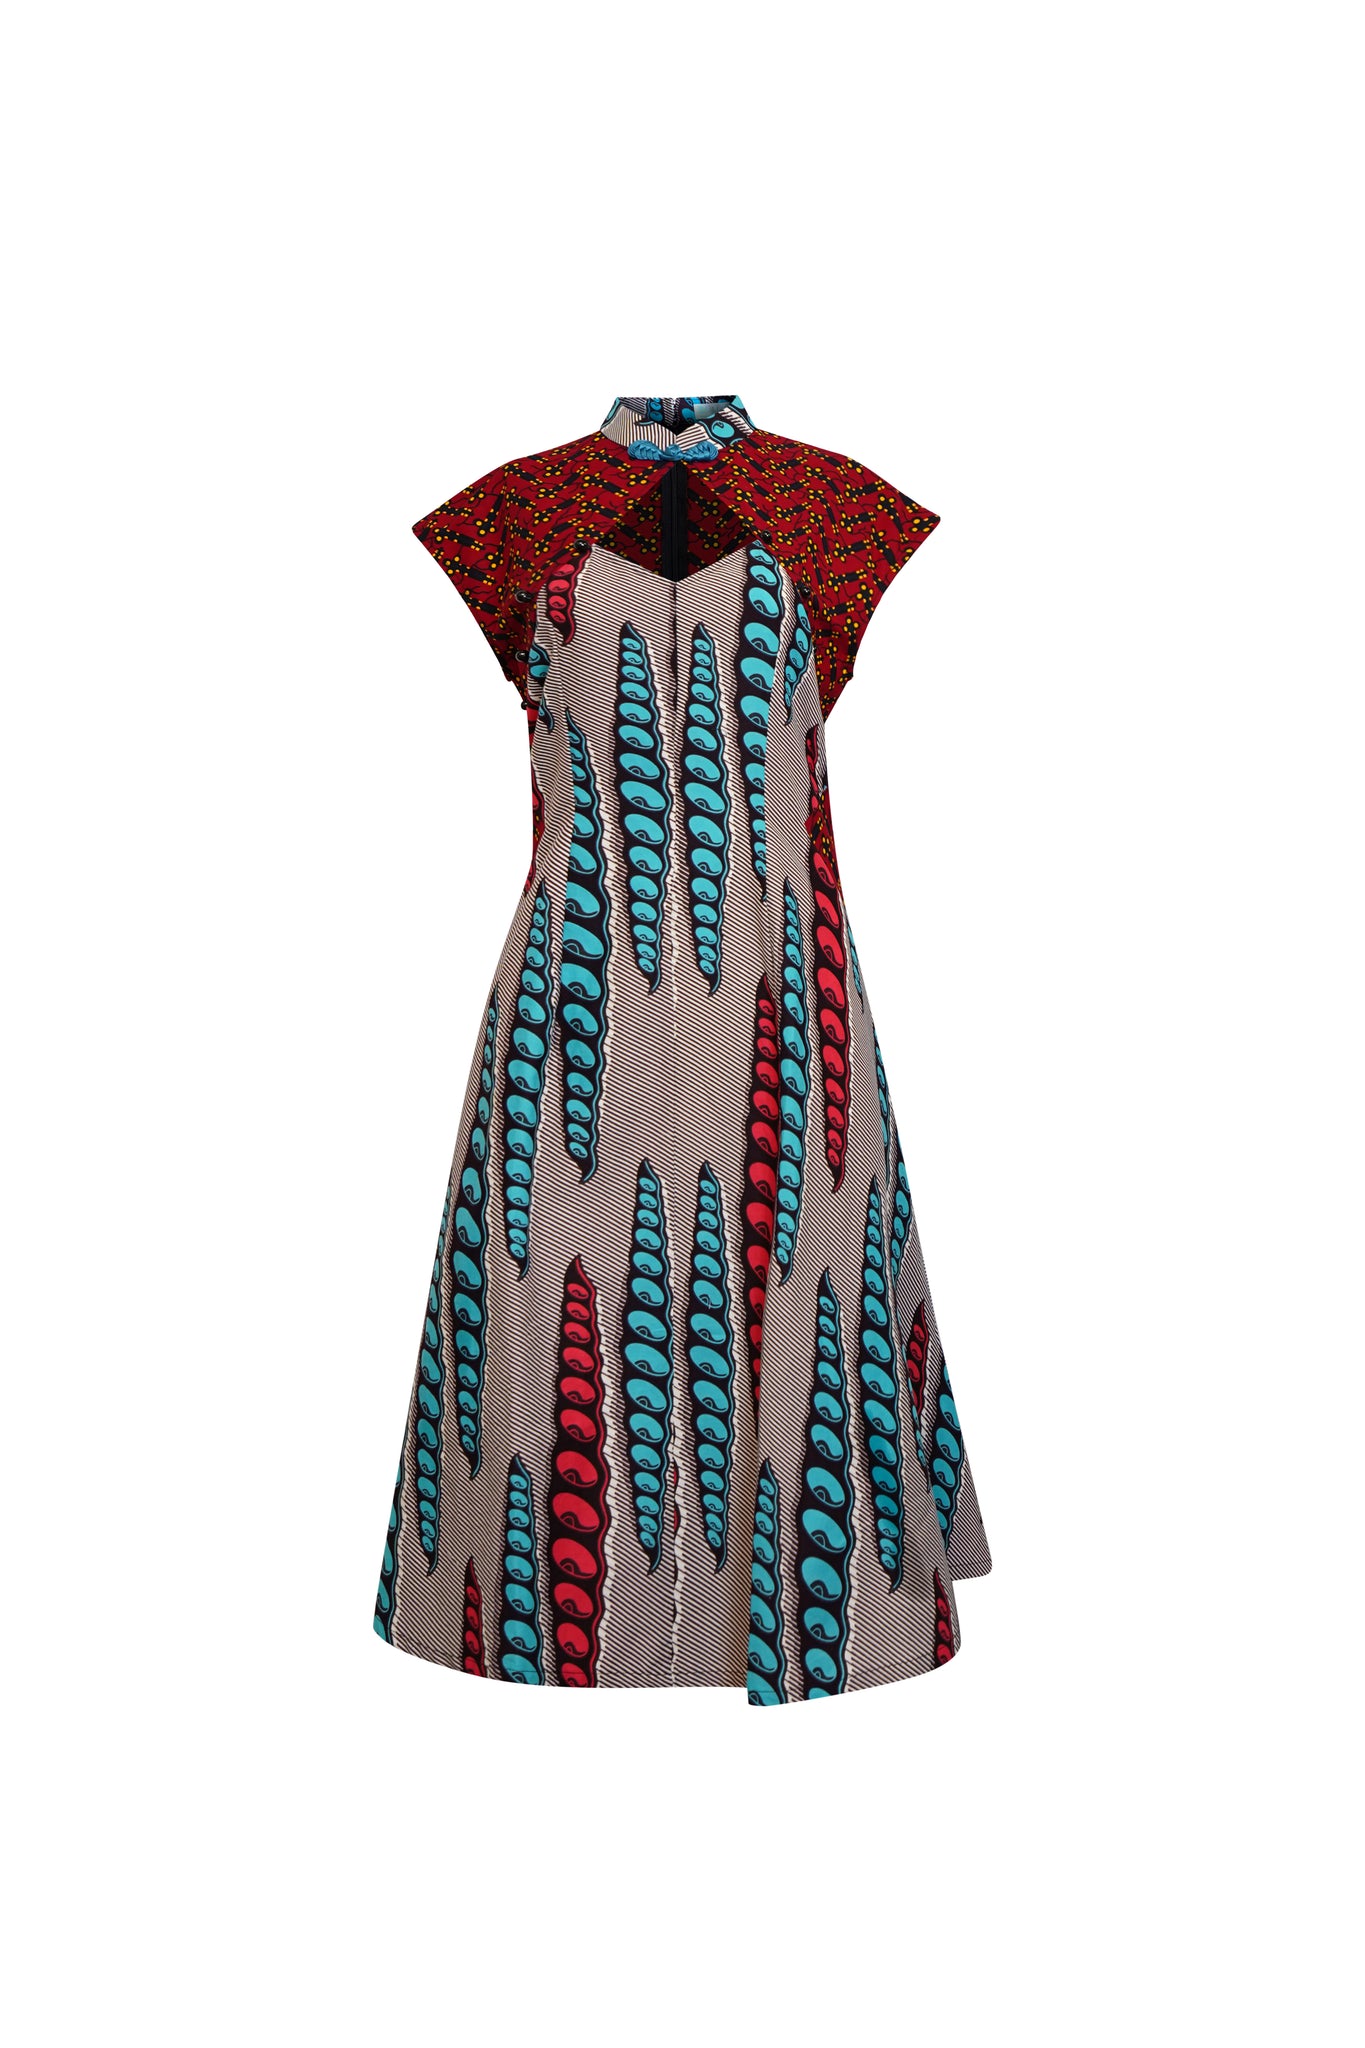 Monifa Dress - Red Blue and Grey African Ankara Wax Cotton Print